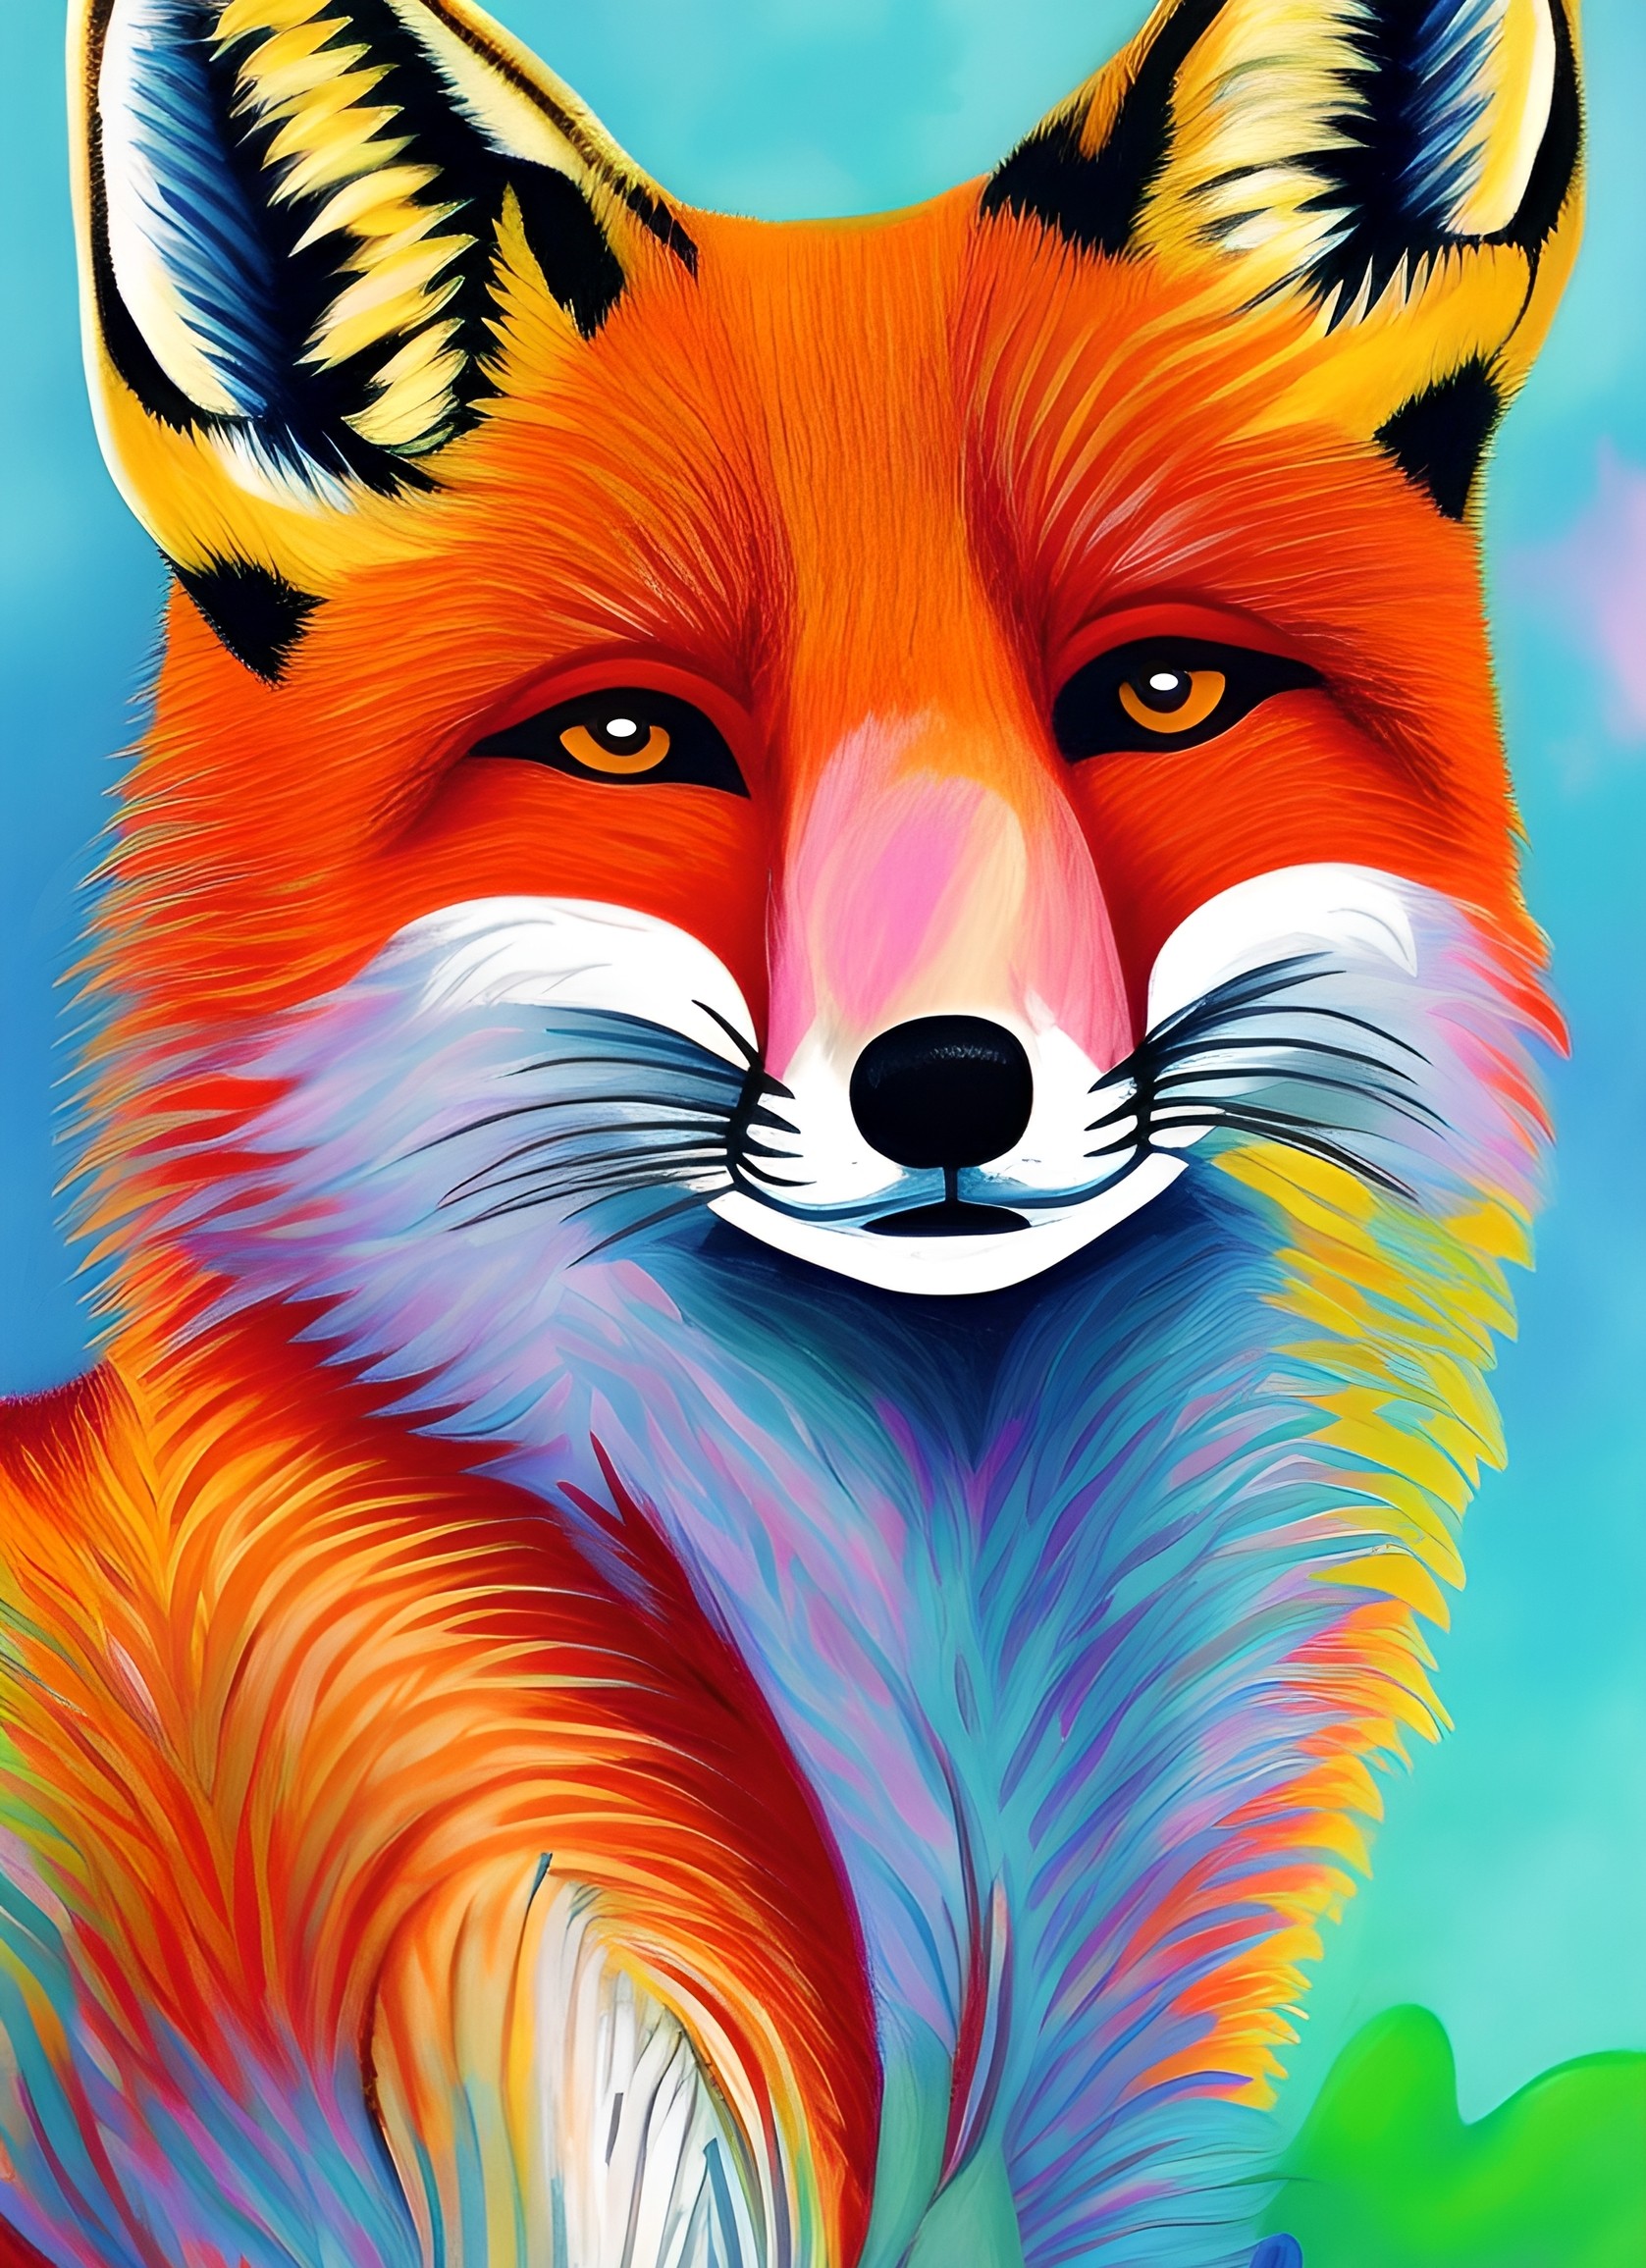 Fox Animal Colourful Abstract Art Blank Greeting Card